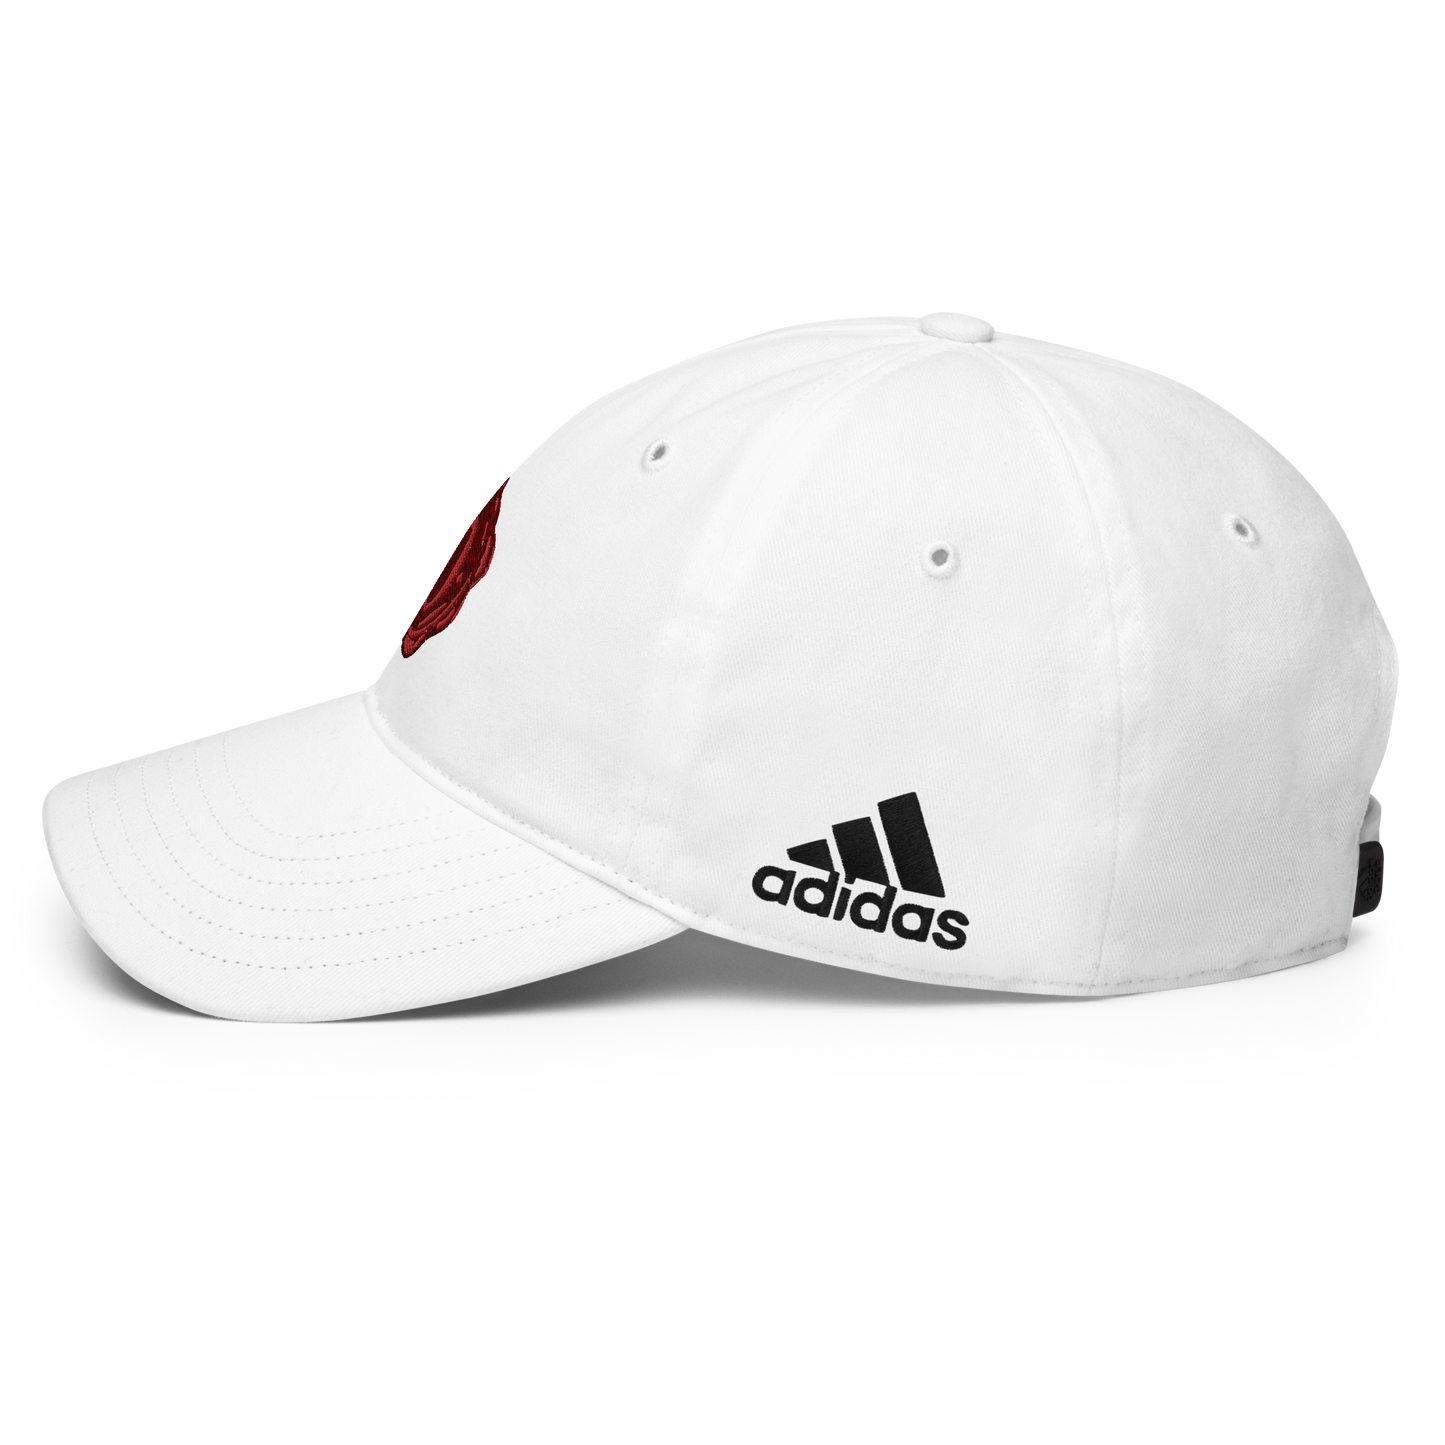 Adidas Performance Golf Cap